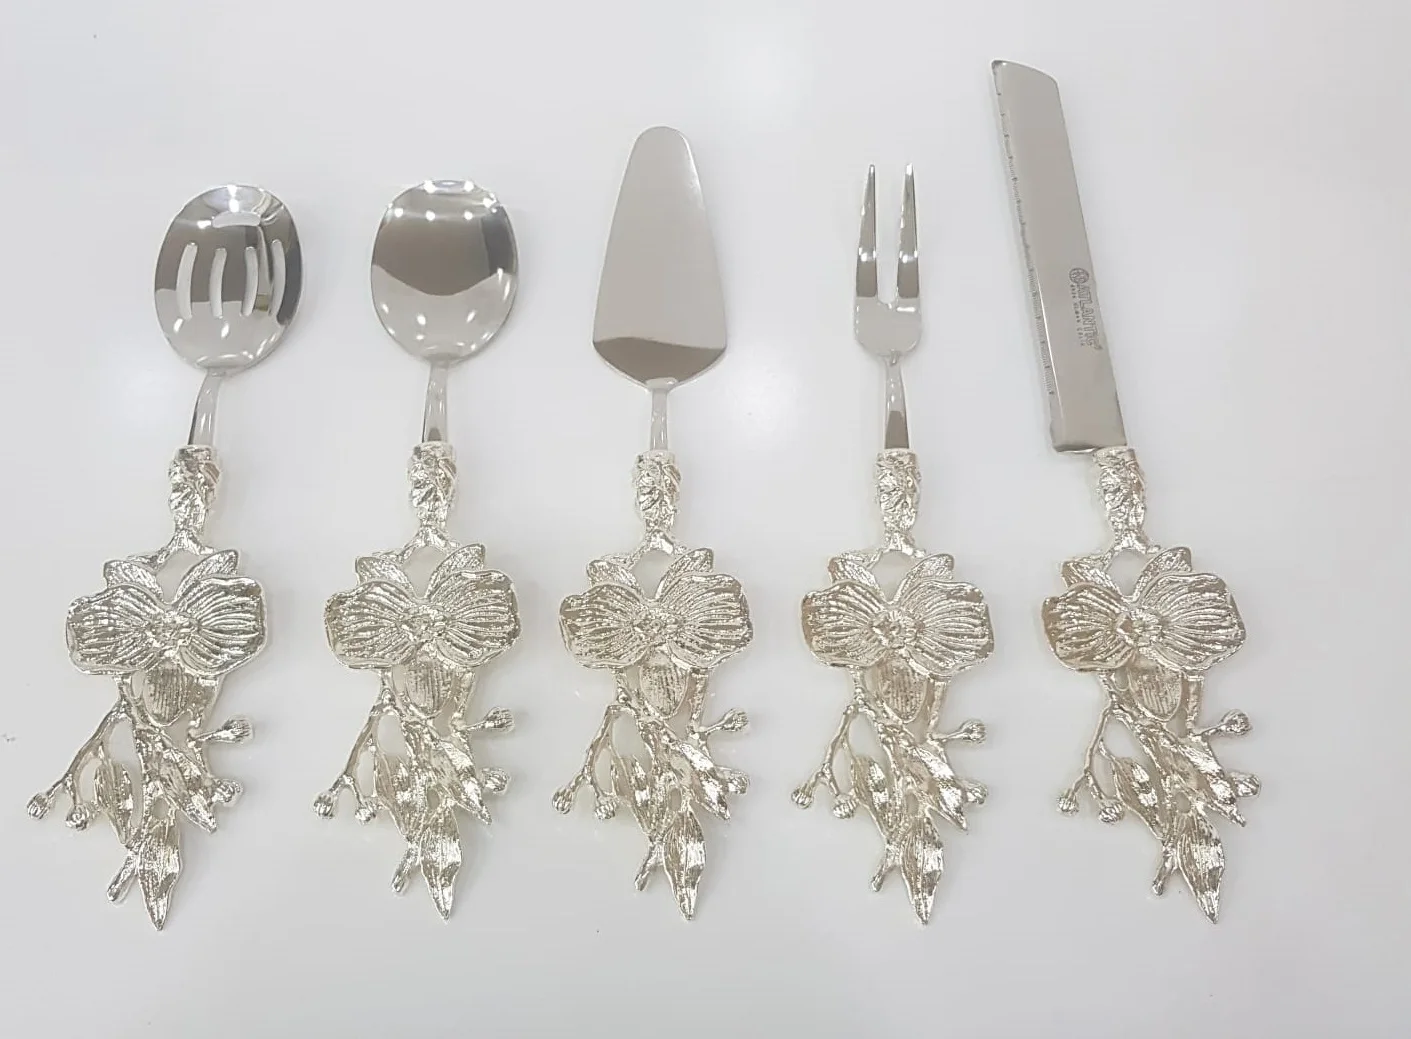 

5 Piece Orchid Design Service Cutlery Silver Colour Tableware Metal Flower Details Kitchen Food Presentation Decorative